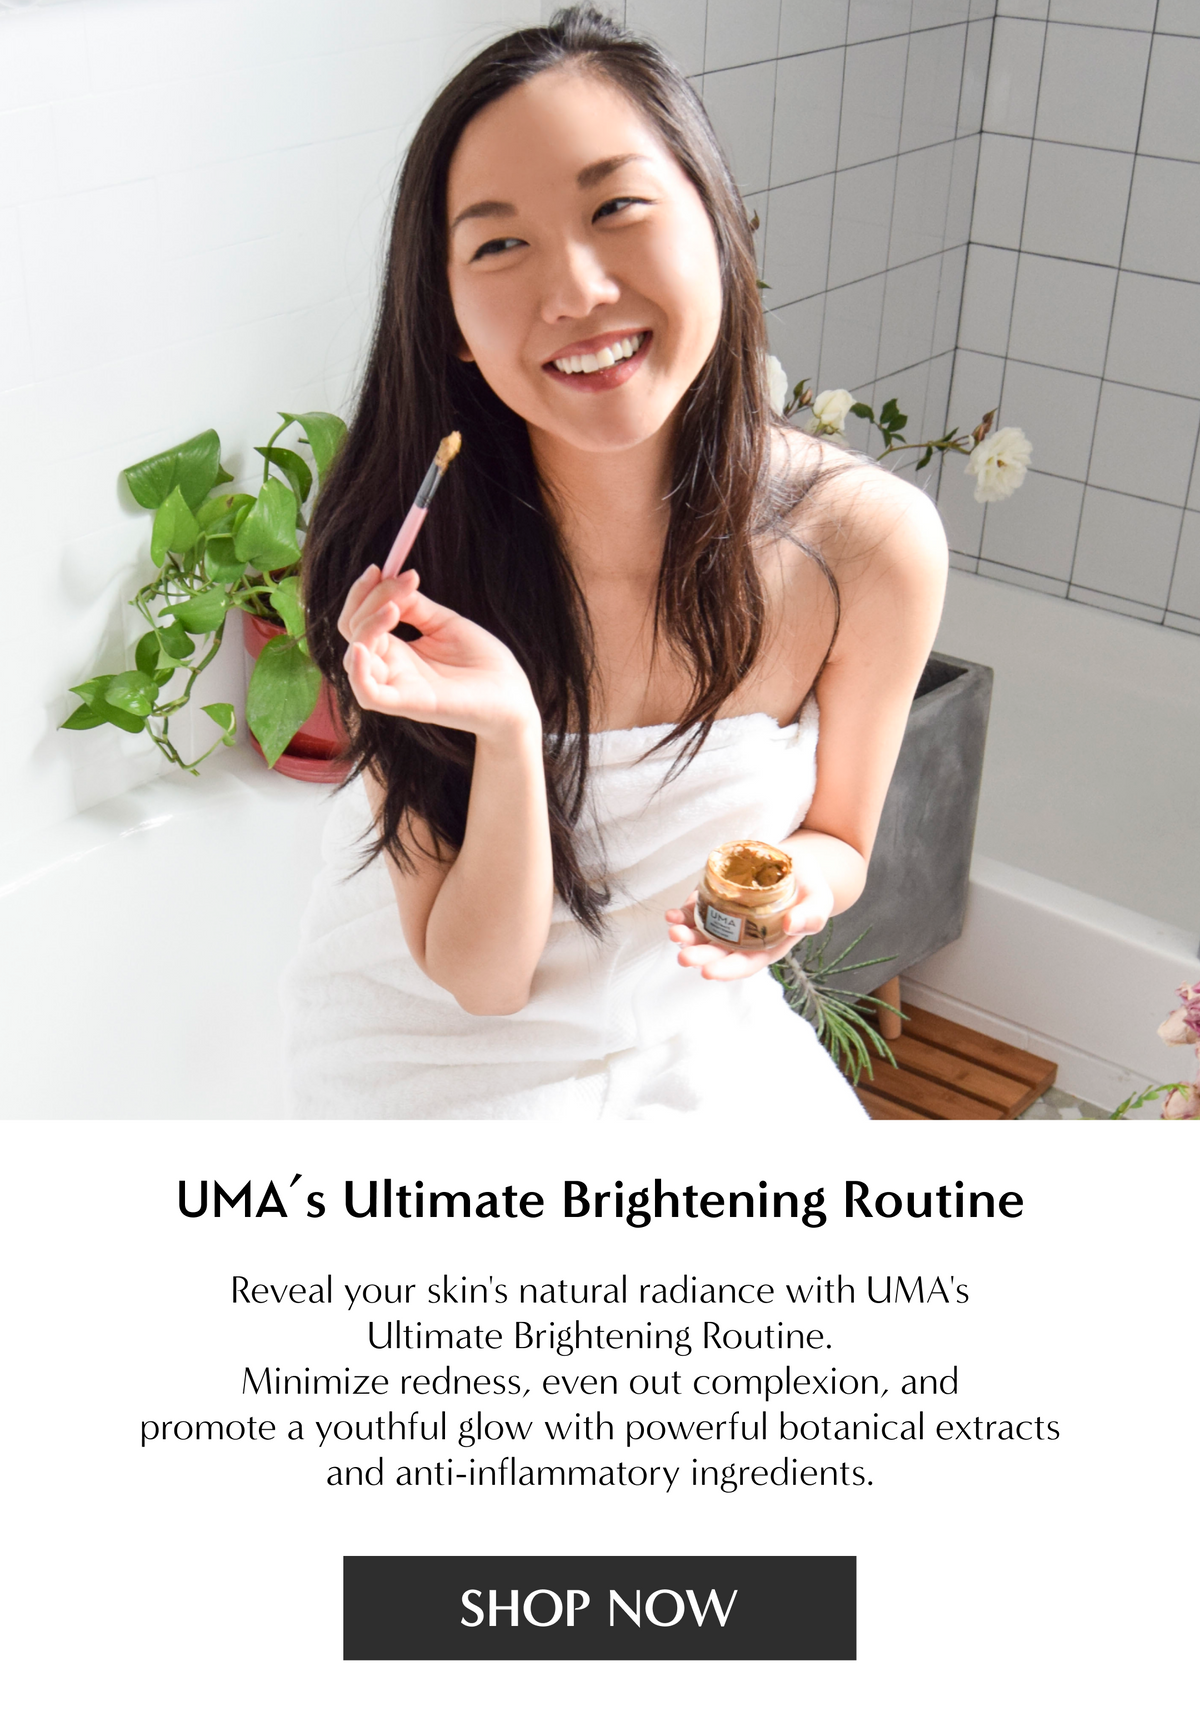 UMAs Ultimate Brightening Routine